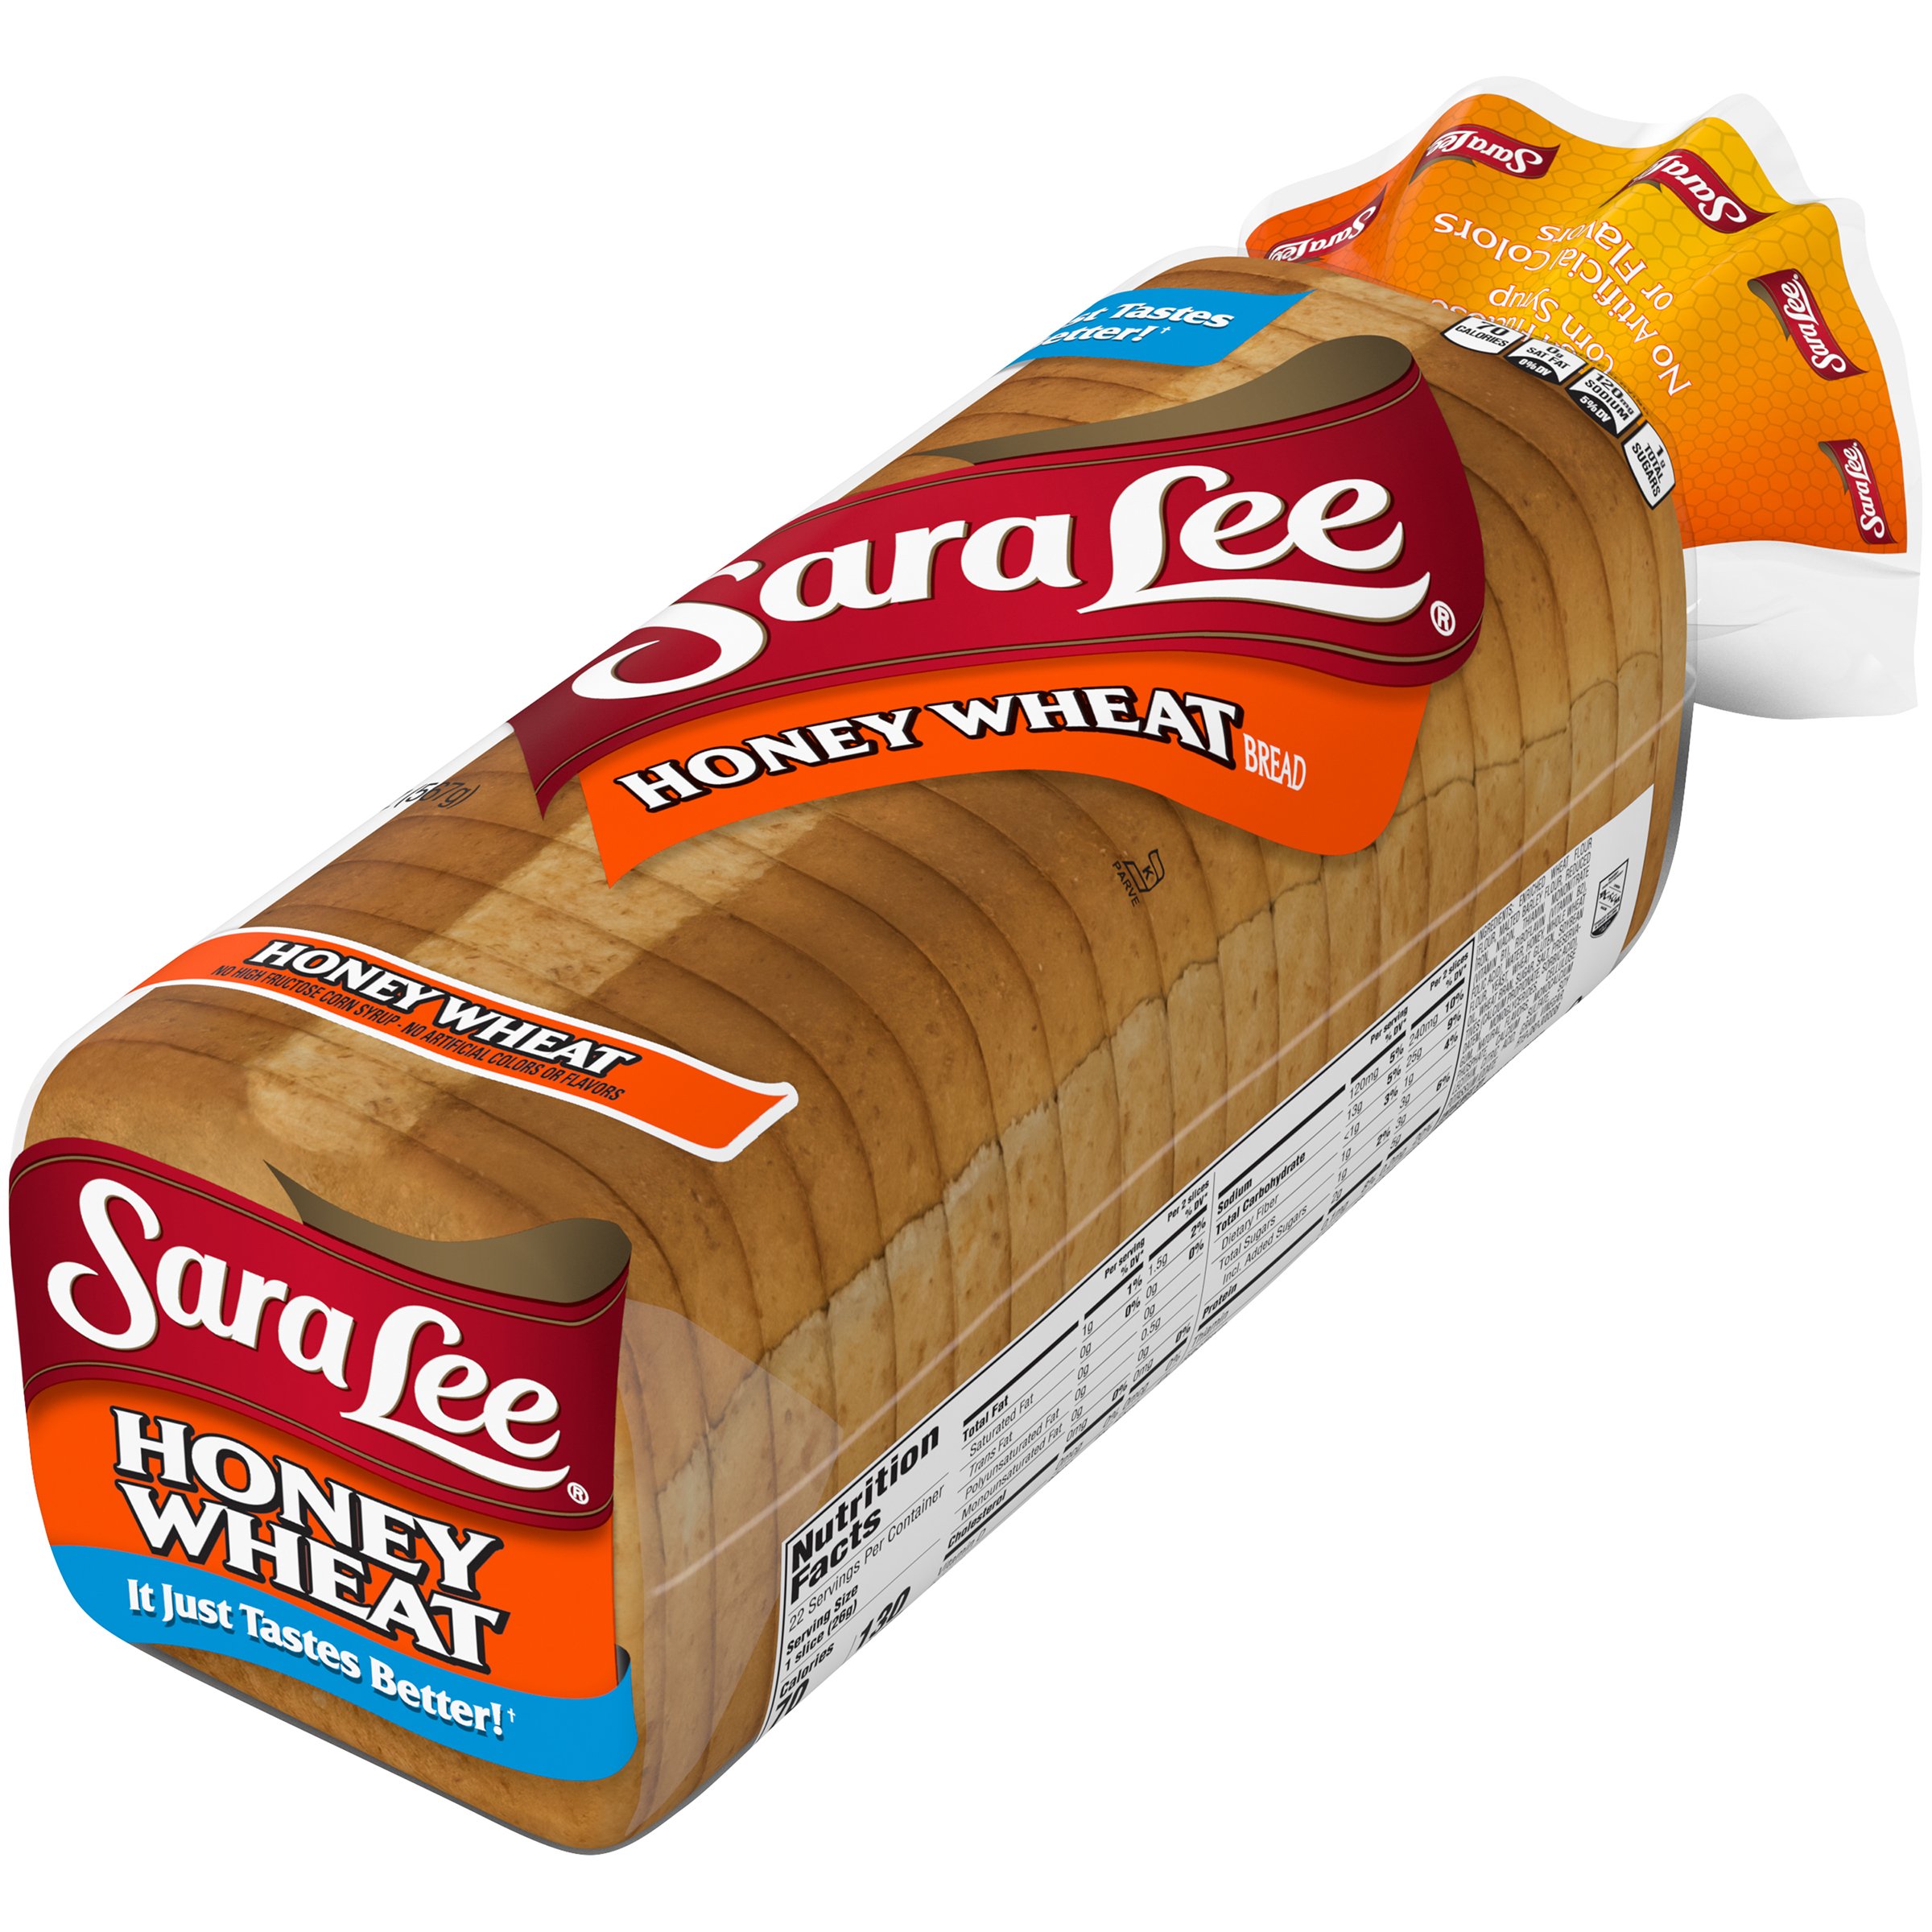 Sara Lee Honey Wheat Bread Nutrition Facts